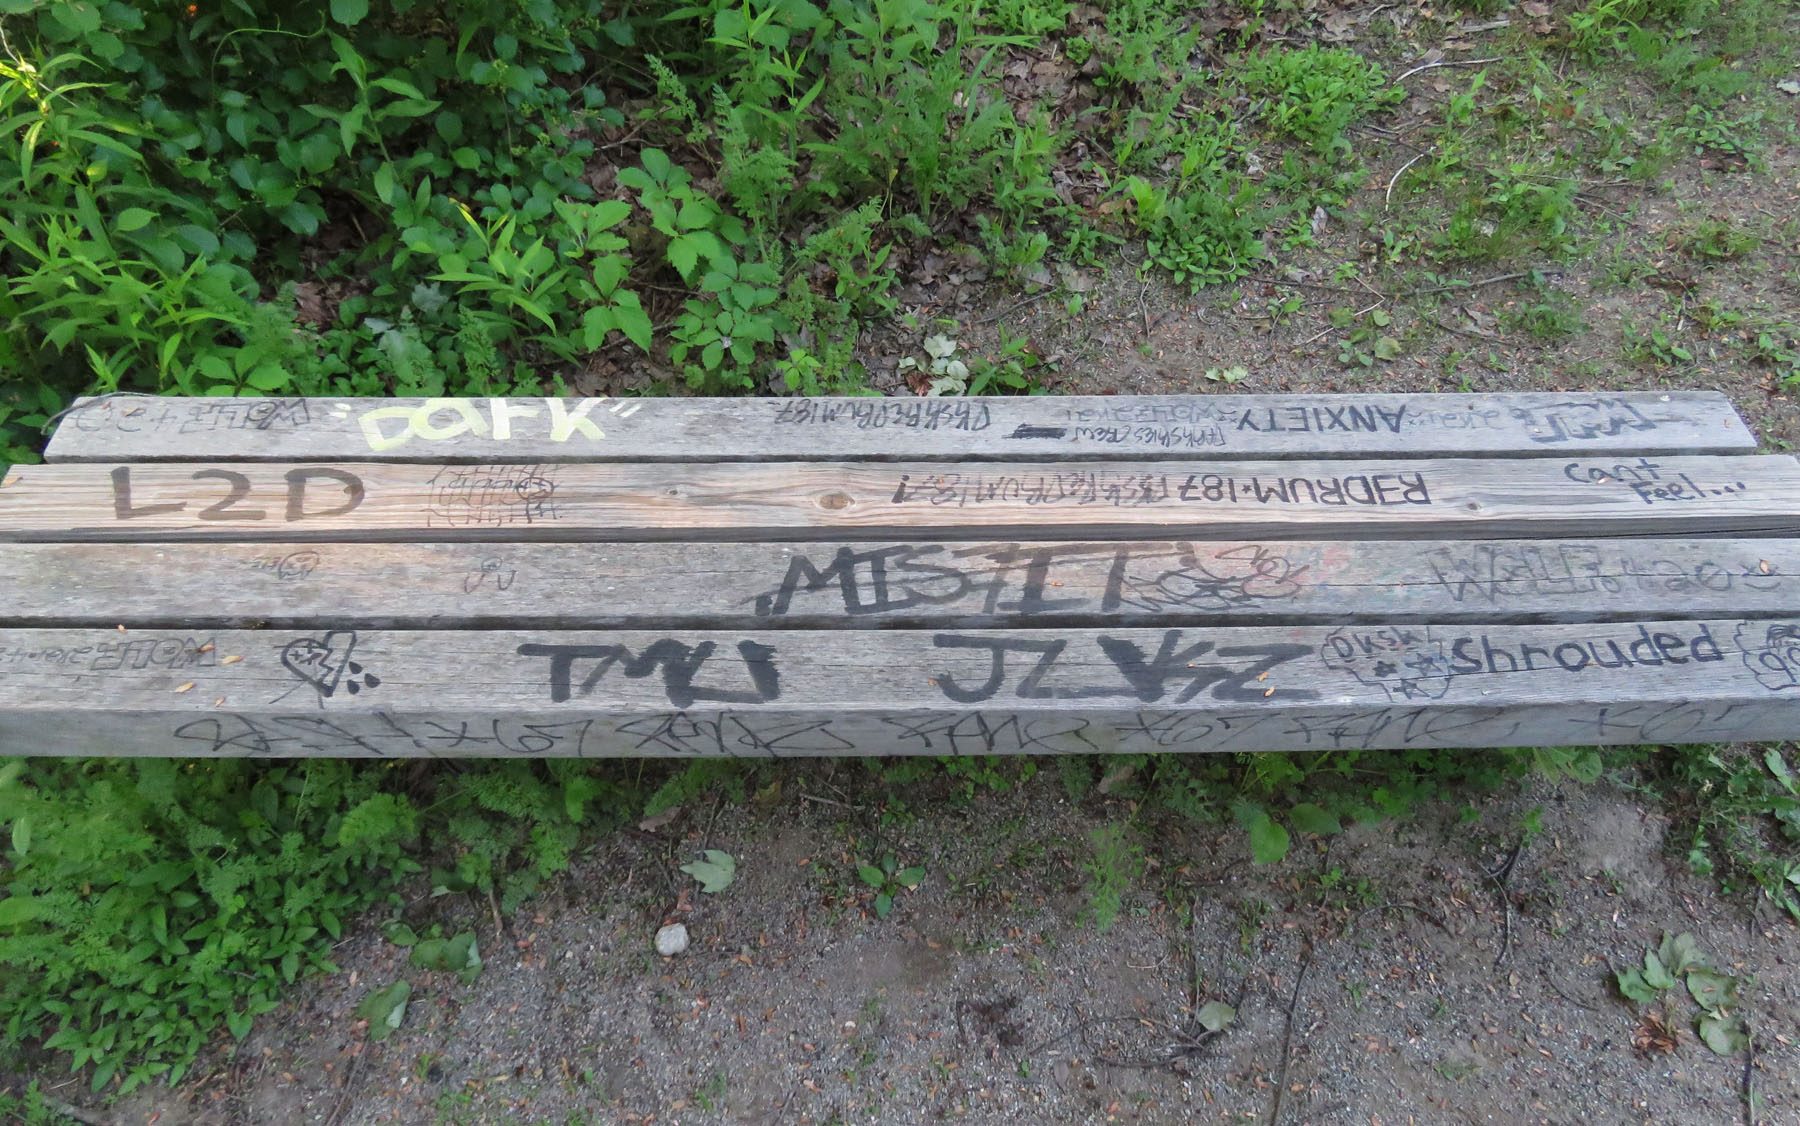 Graffiti vandalism in Winchendon